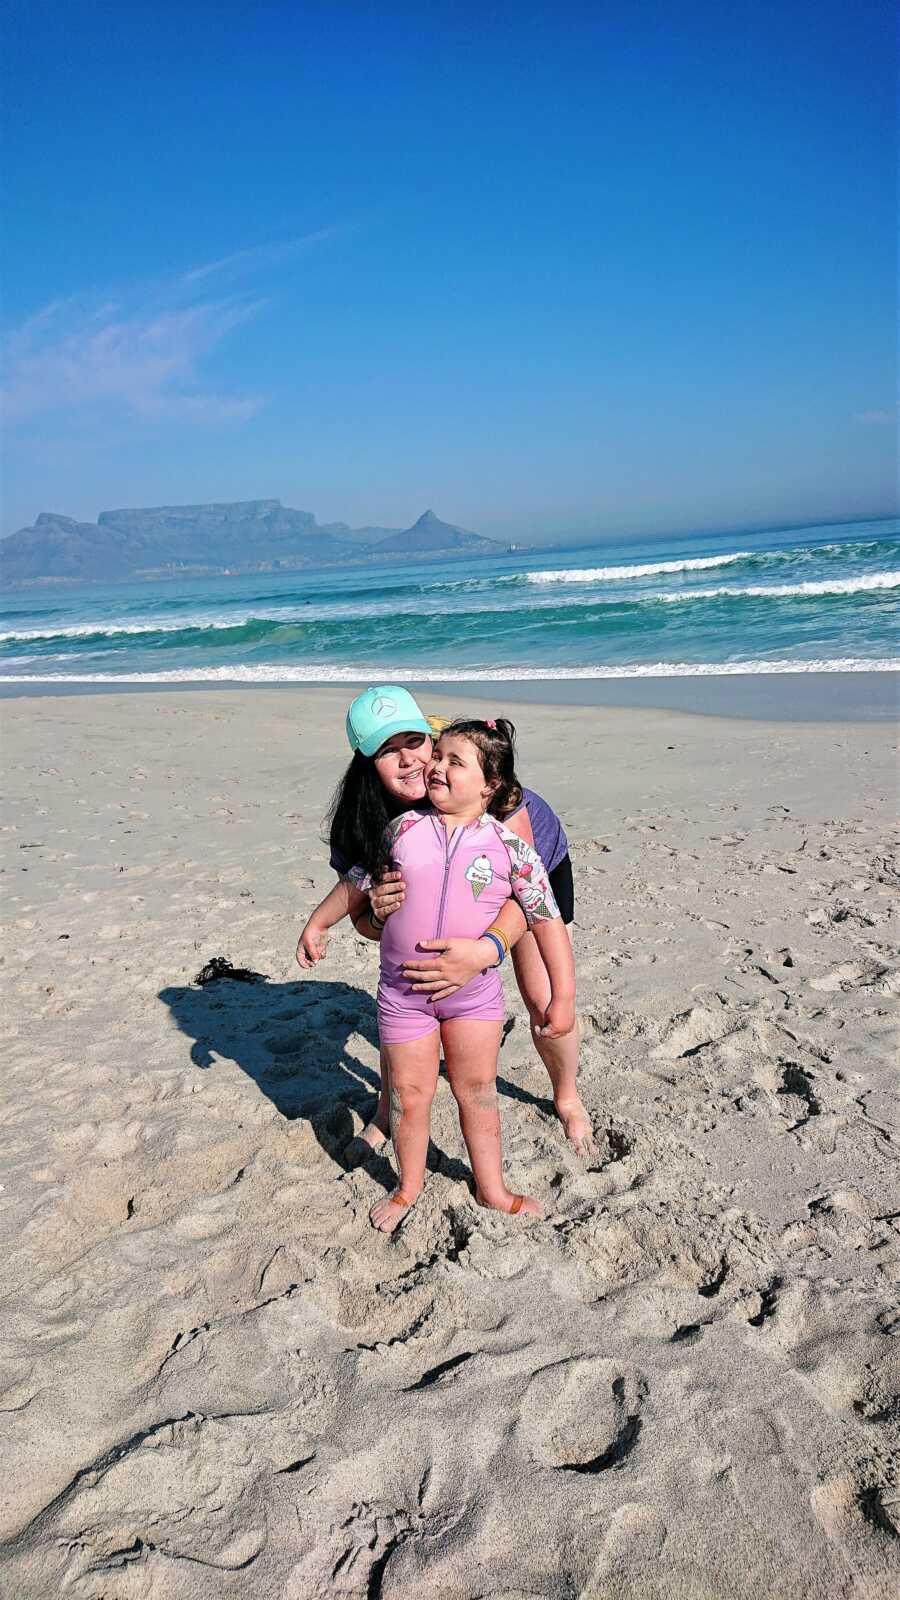 mom and daughter enjoying the beach